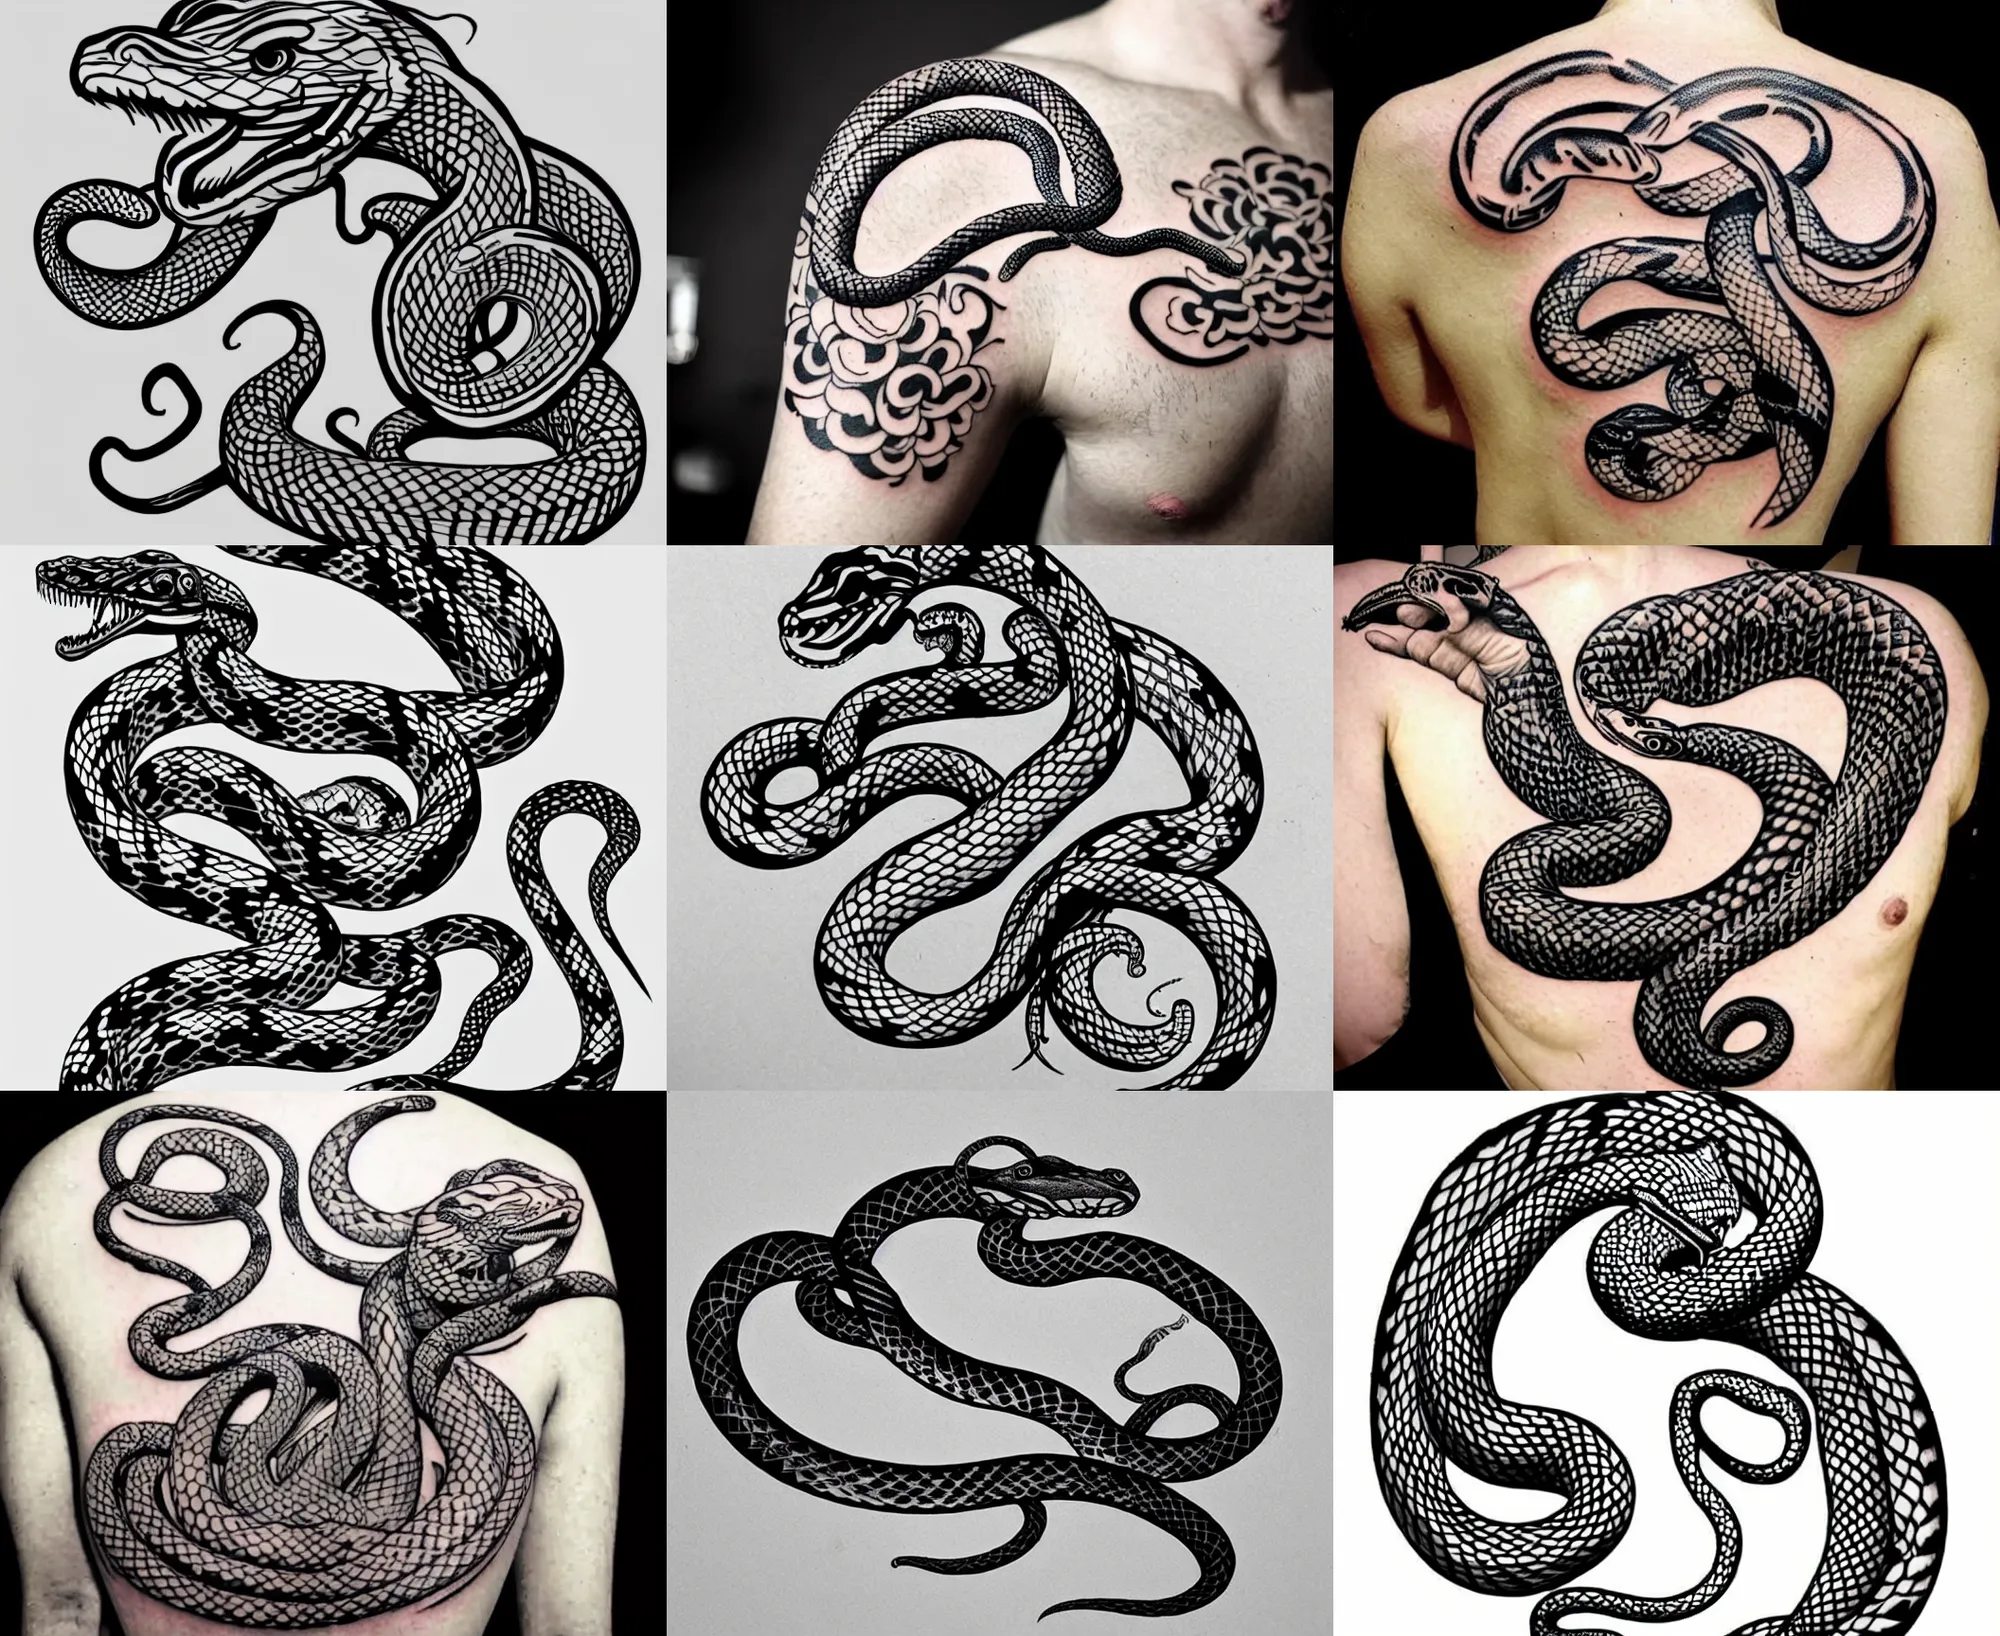 Cobra Tattoo Design Free Vector and graphic 52974061.